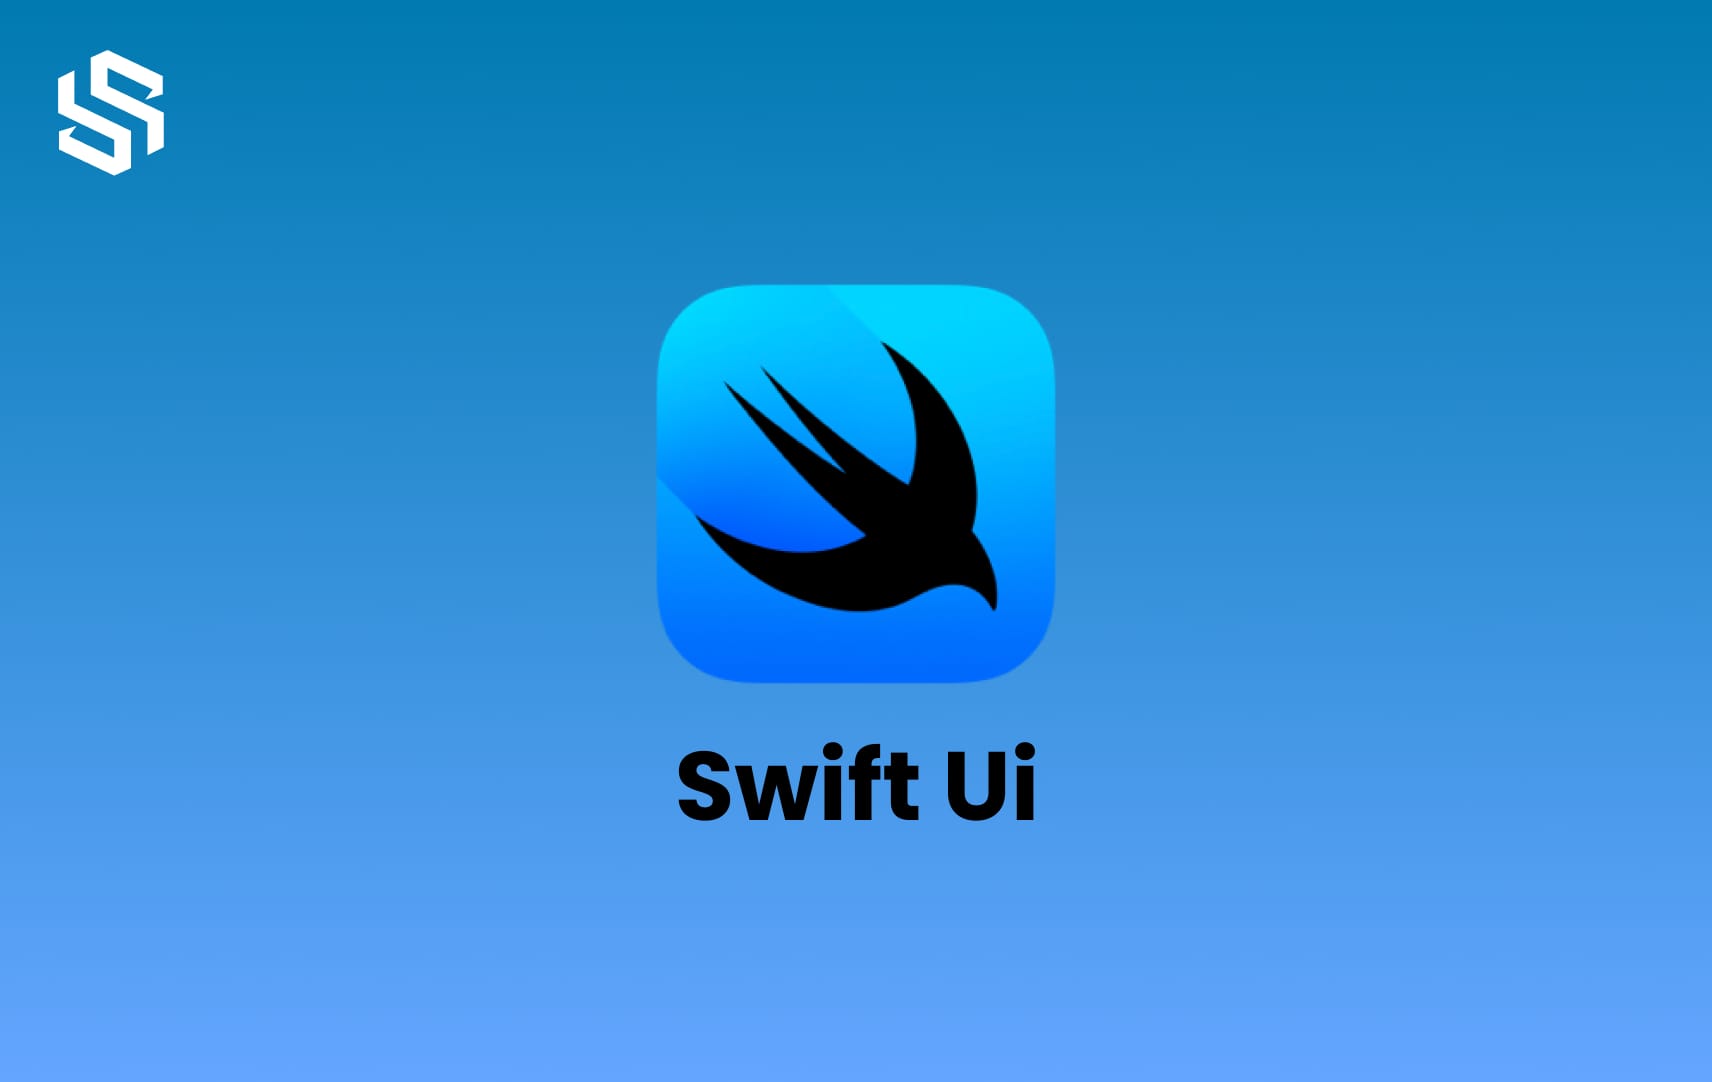 Swift UI